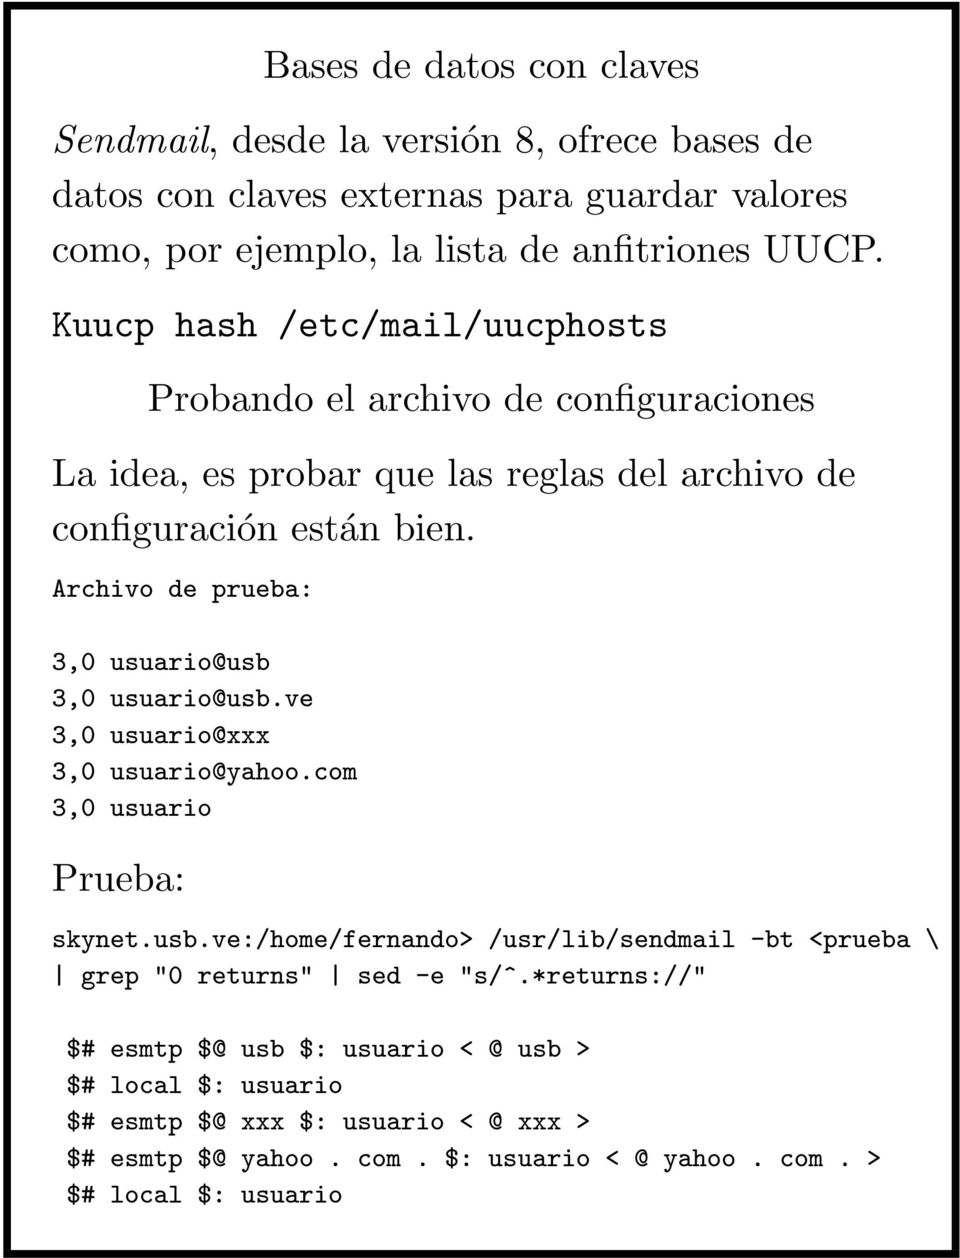 Archivo de prueba: 3,0 usuario@usb 3,0 usuario@usb.ve 3,0 usuario@xxx 3,0 usuario@yahoo.com 3,0 usuario Prueba: skynet.usb.ve:/home/fernando> /usr/lib/sendmail -bt <prueba \ grep "0 returns" sed -e "s/^.